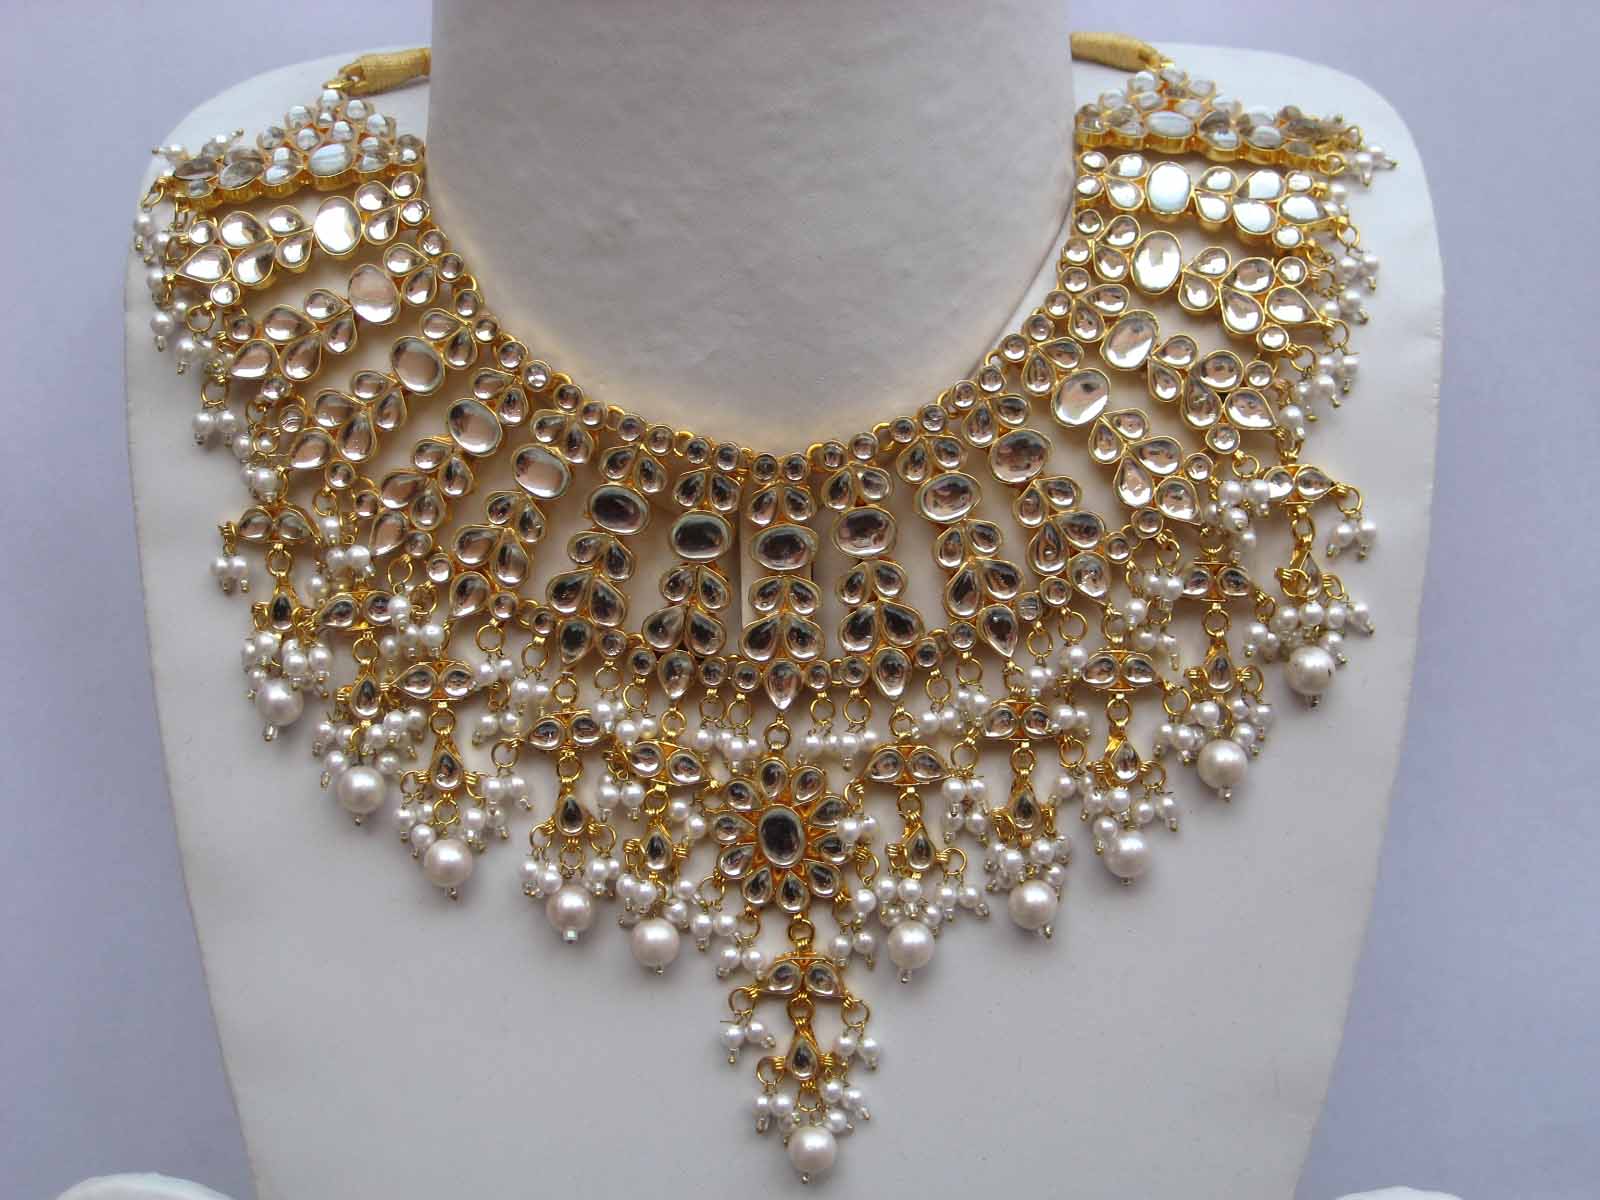 http://i01.i.aliimg.com/photo/v0/105028675/Indian_Bridal_Jewellery.jpg